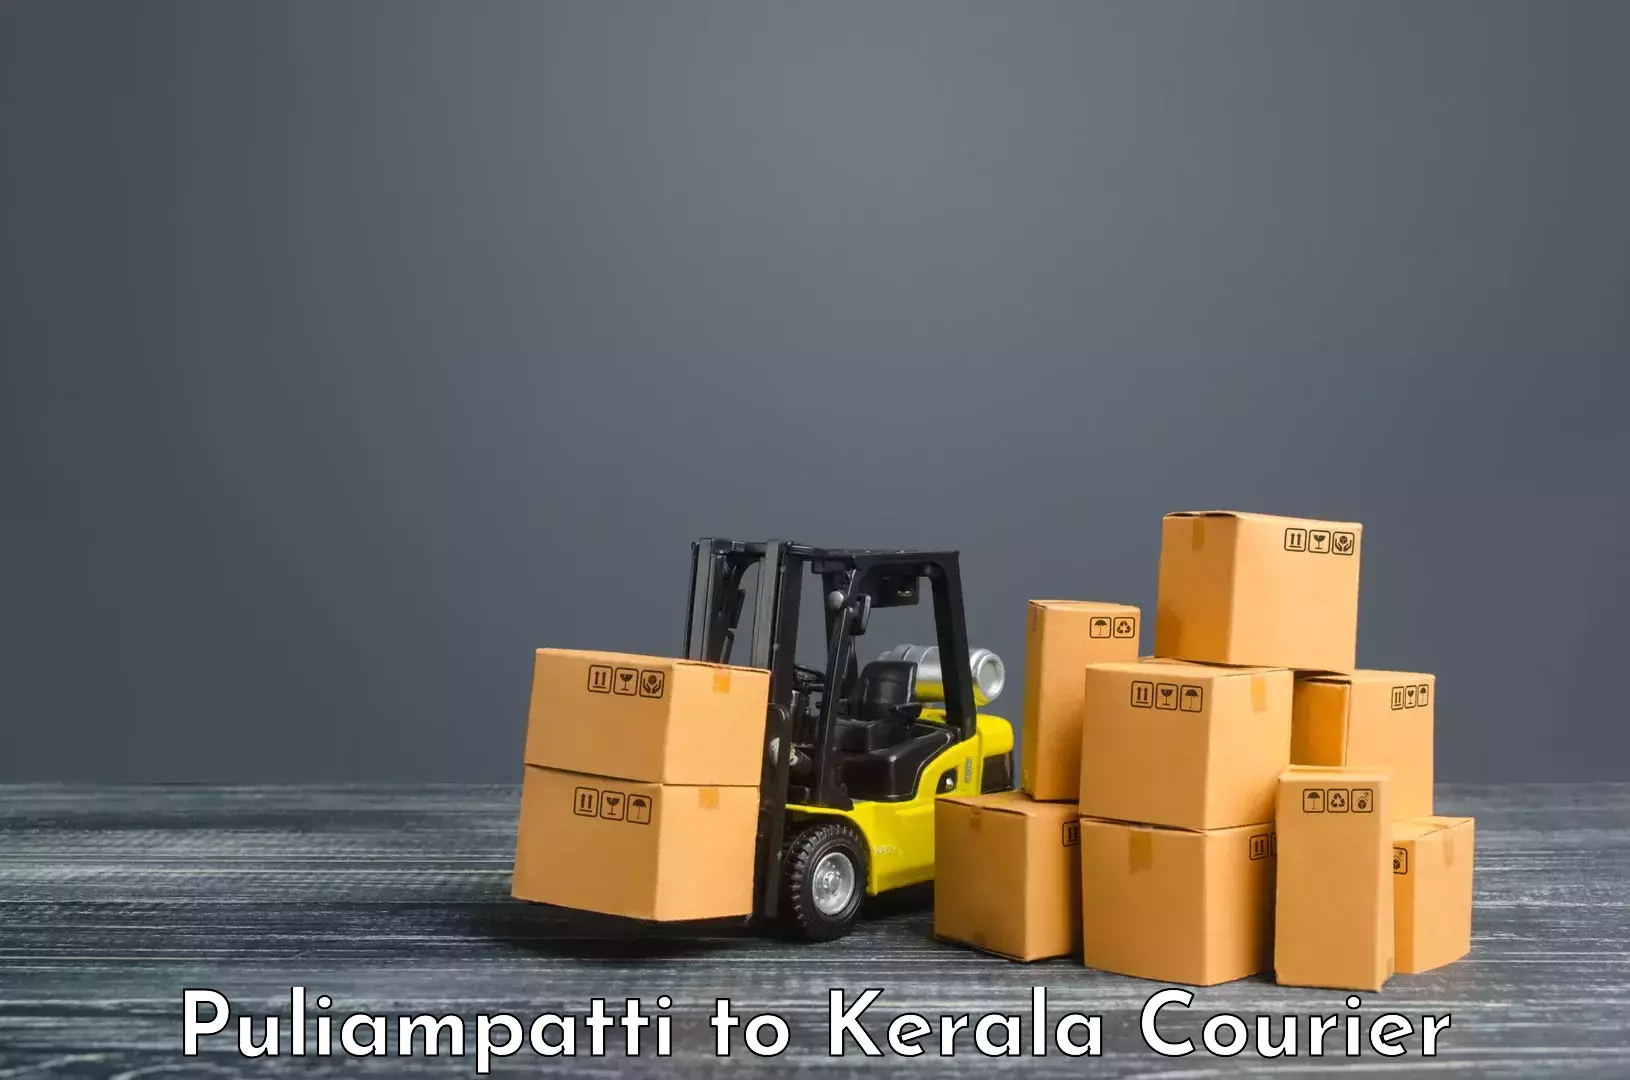 Tech-enabled shipping Puliampatti to Kochi